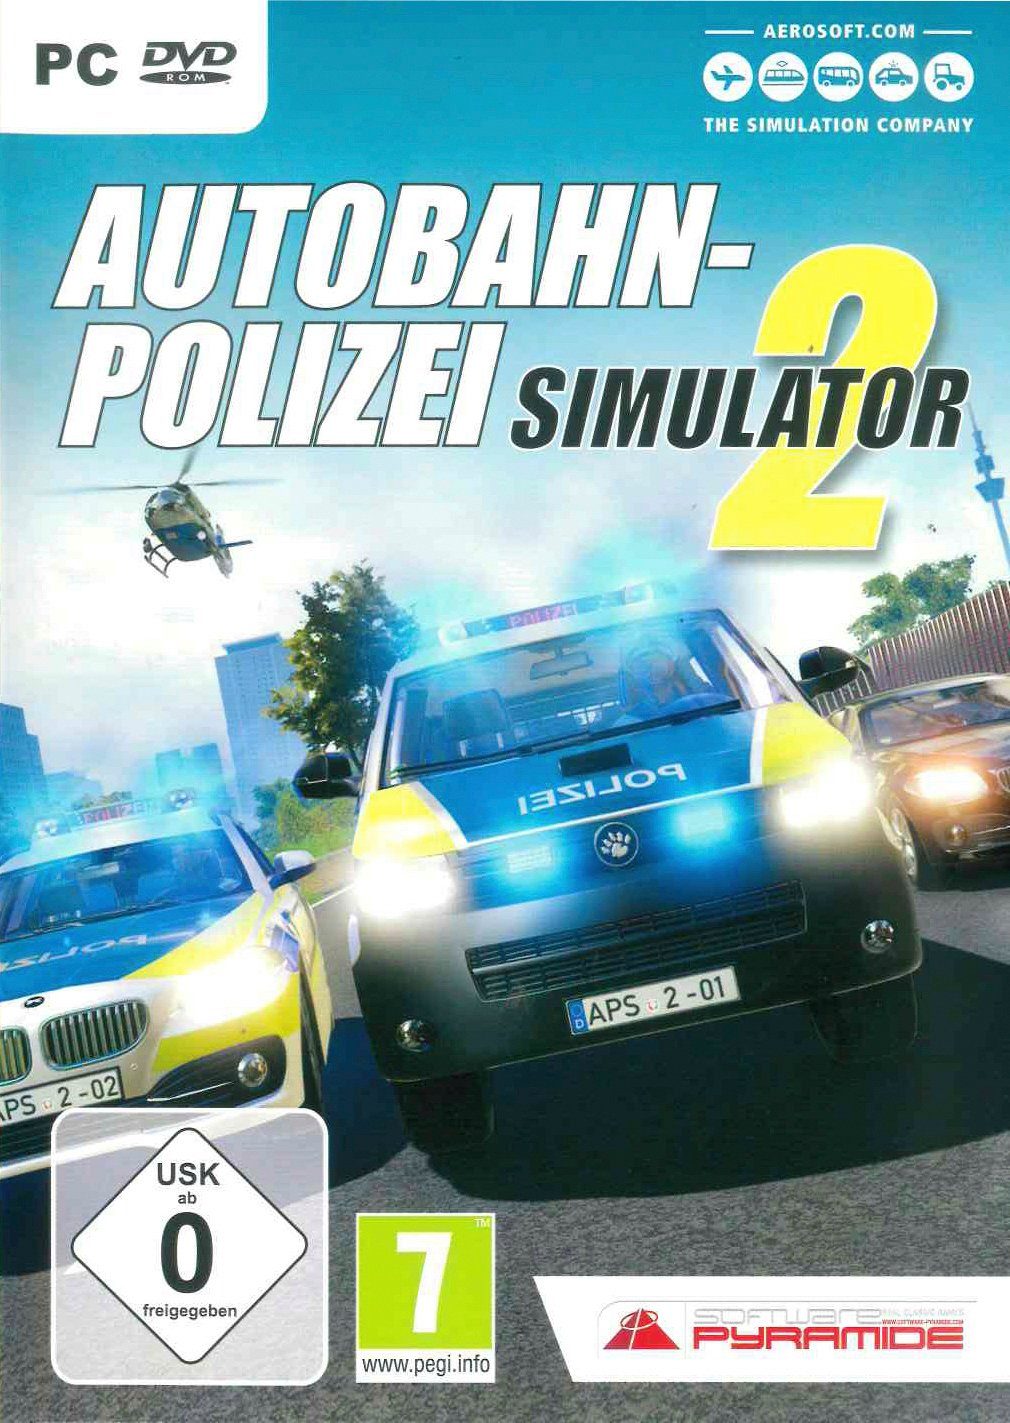 Autobahn-Polizei Simulator 2 PC | PC-Spiele